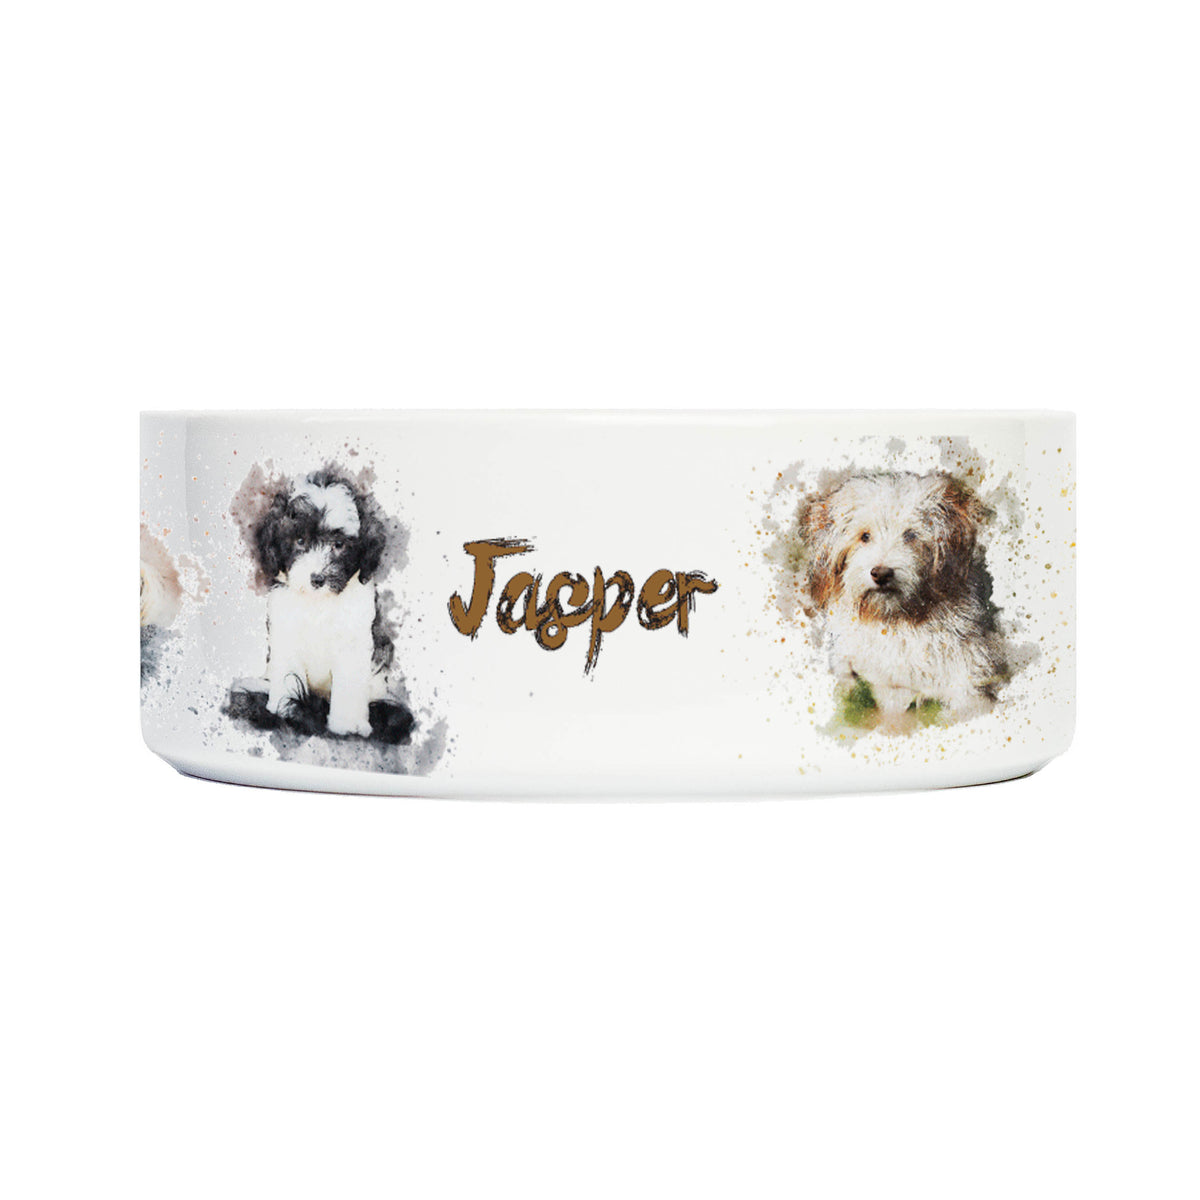 Personalised bowl for dogs / ceramic - 22oz 650ml (design 1)